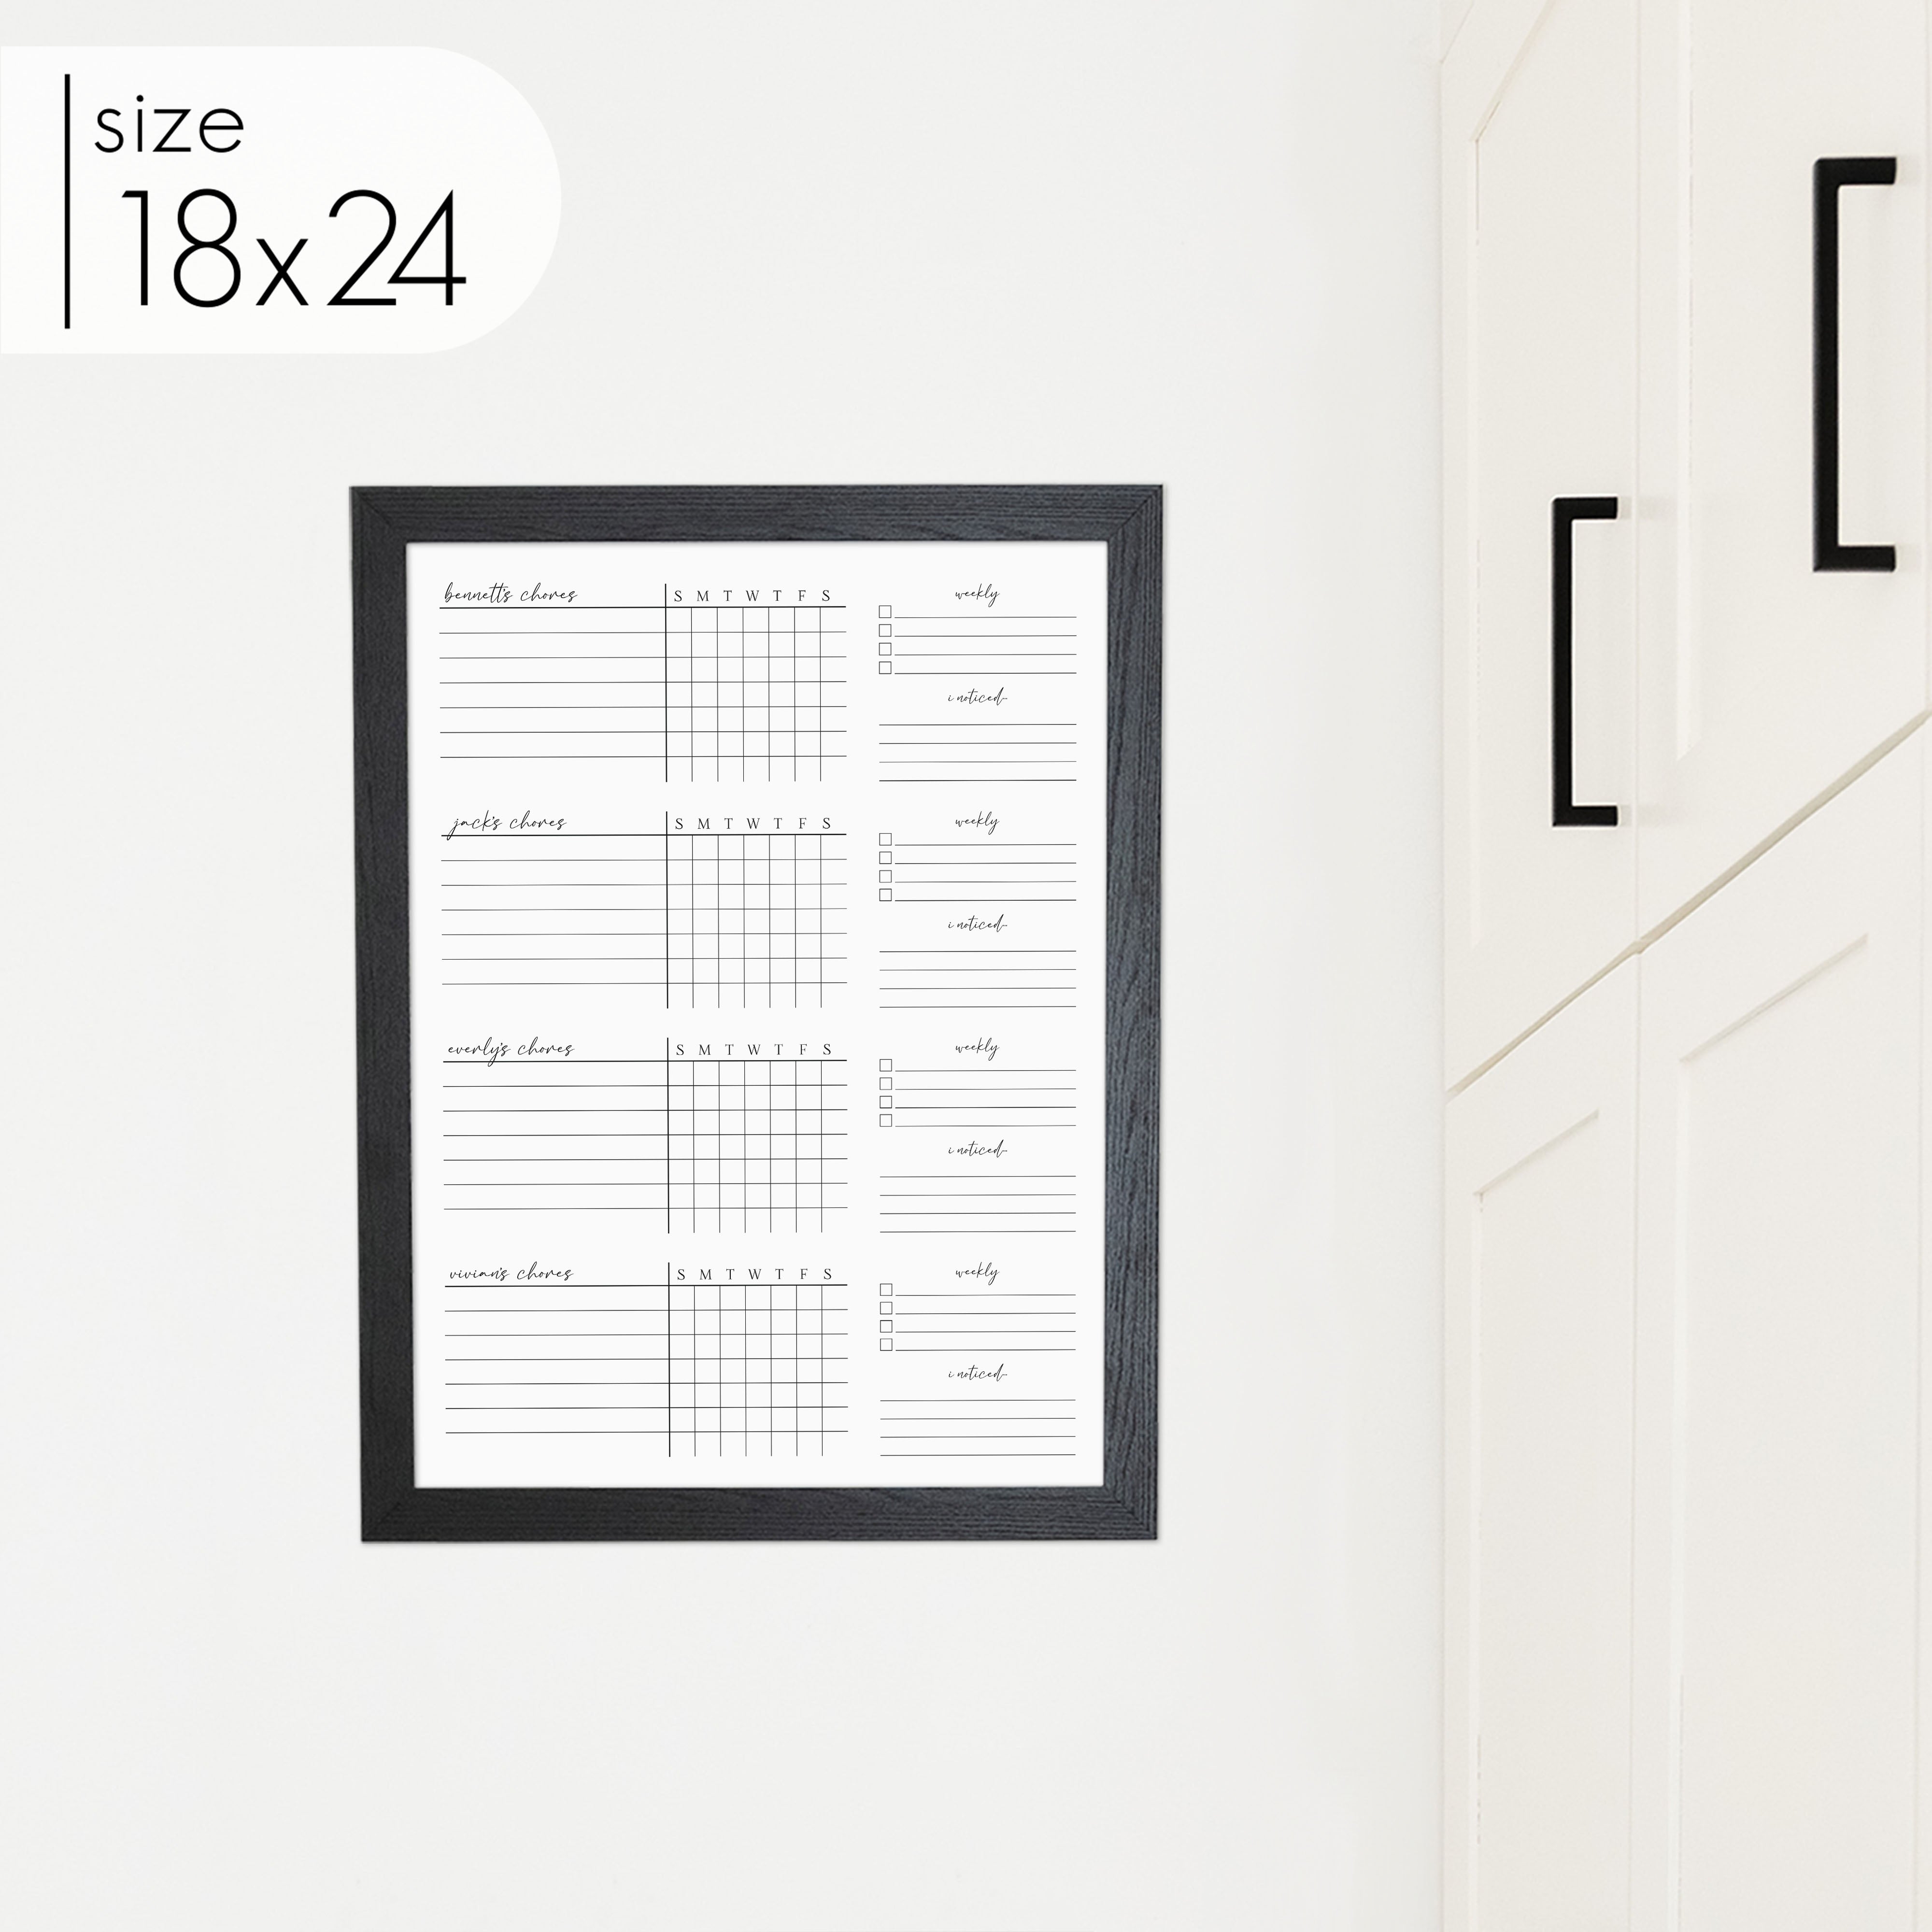 4 Person Framed Whiteboard Chore Chart  | Vertical Pennington